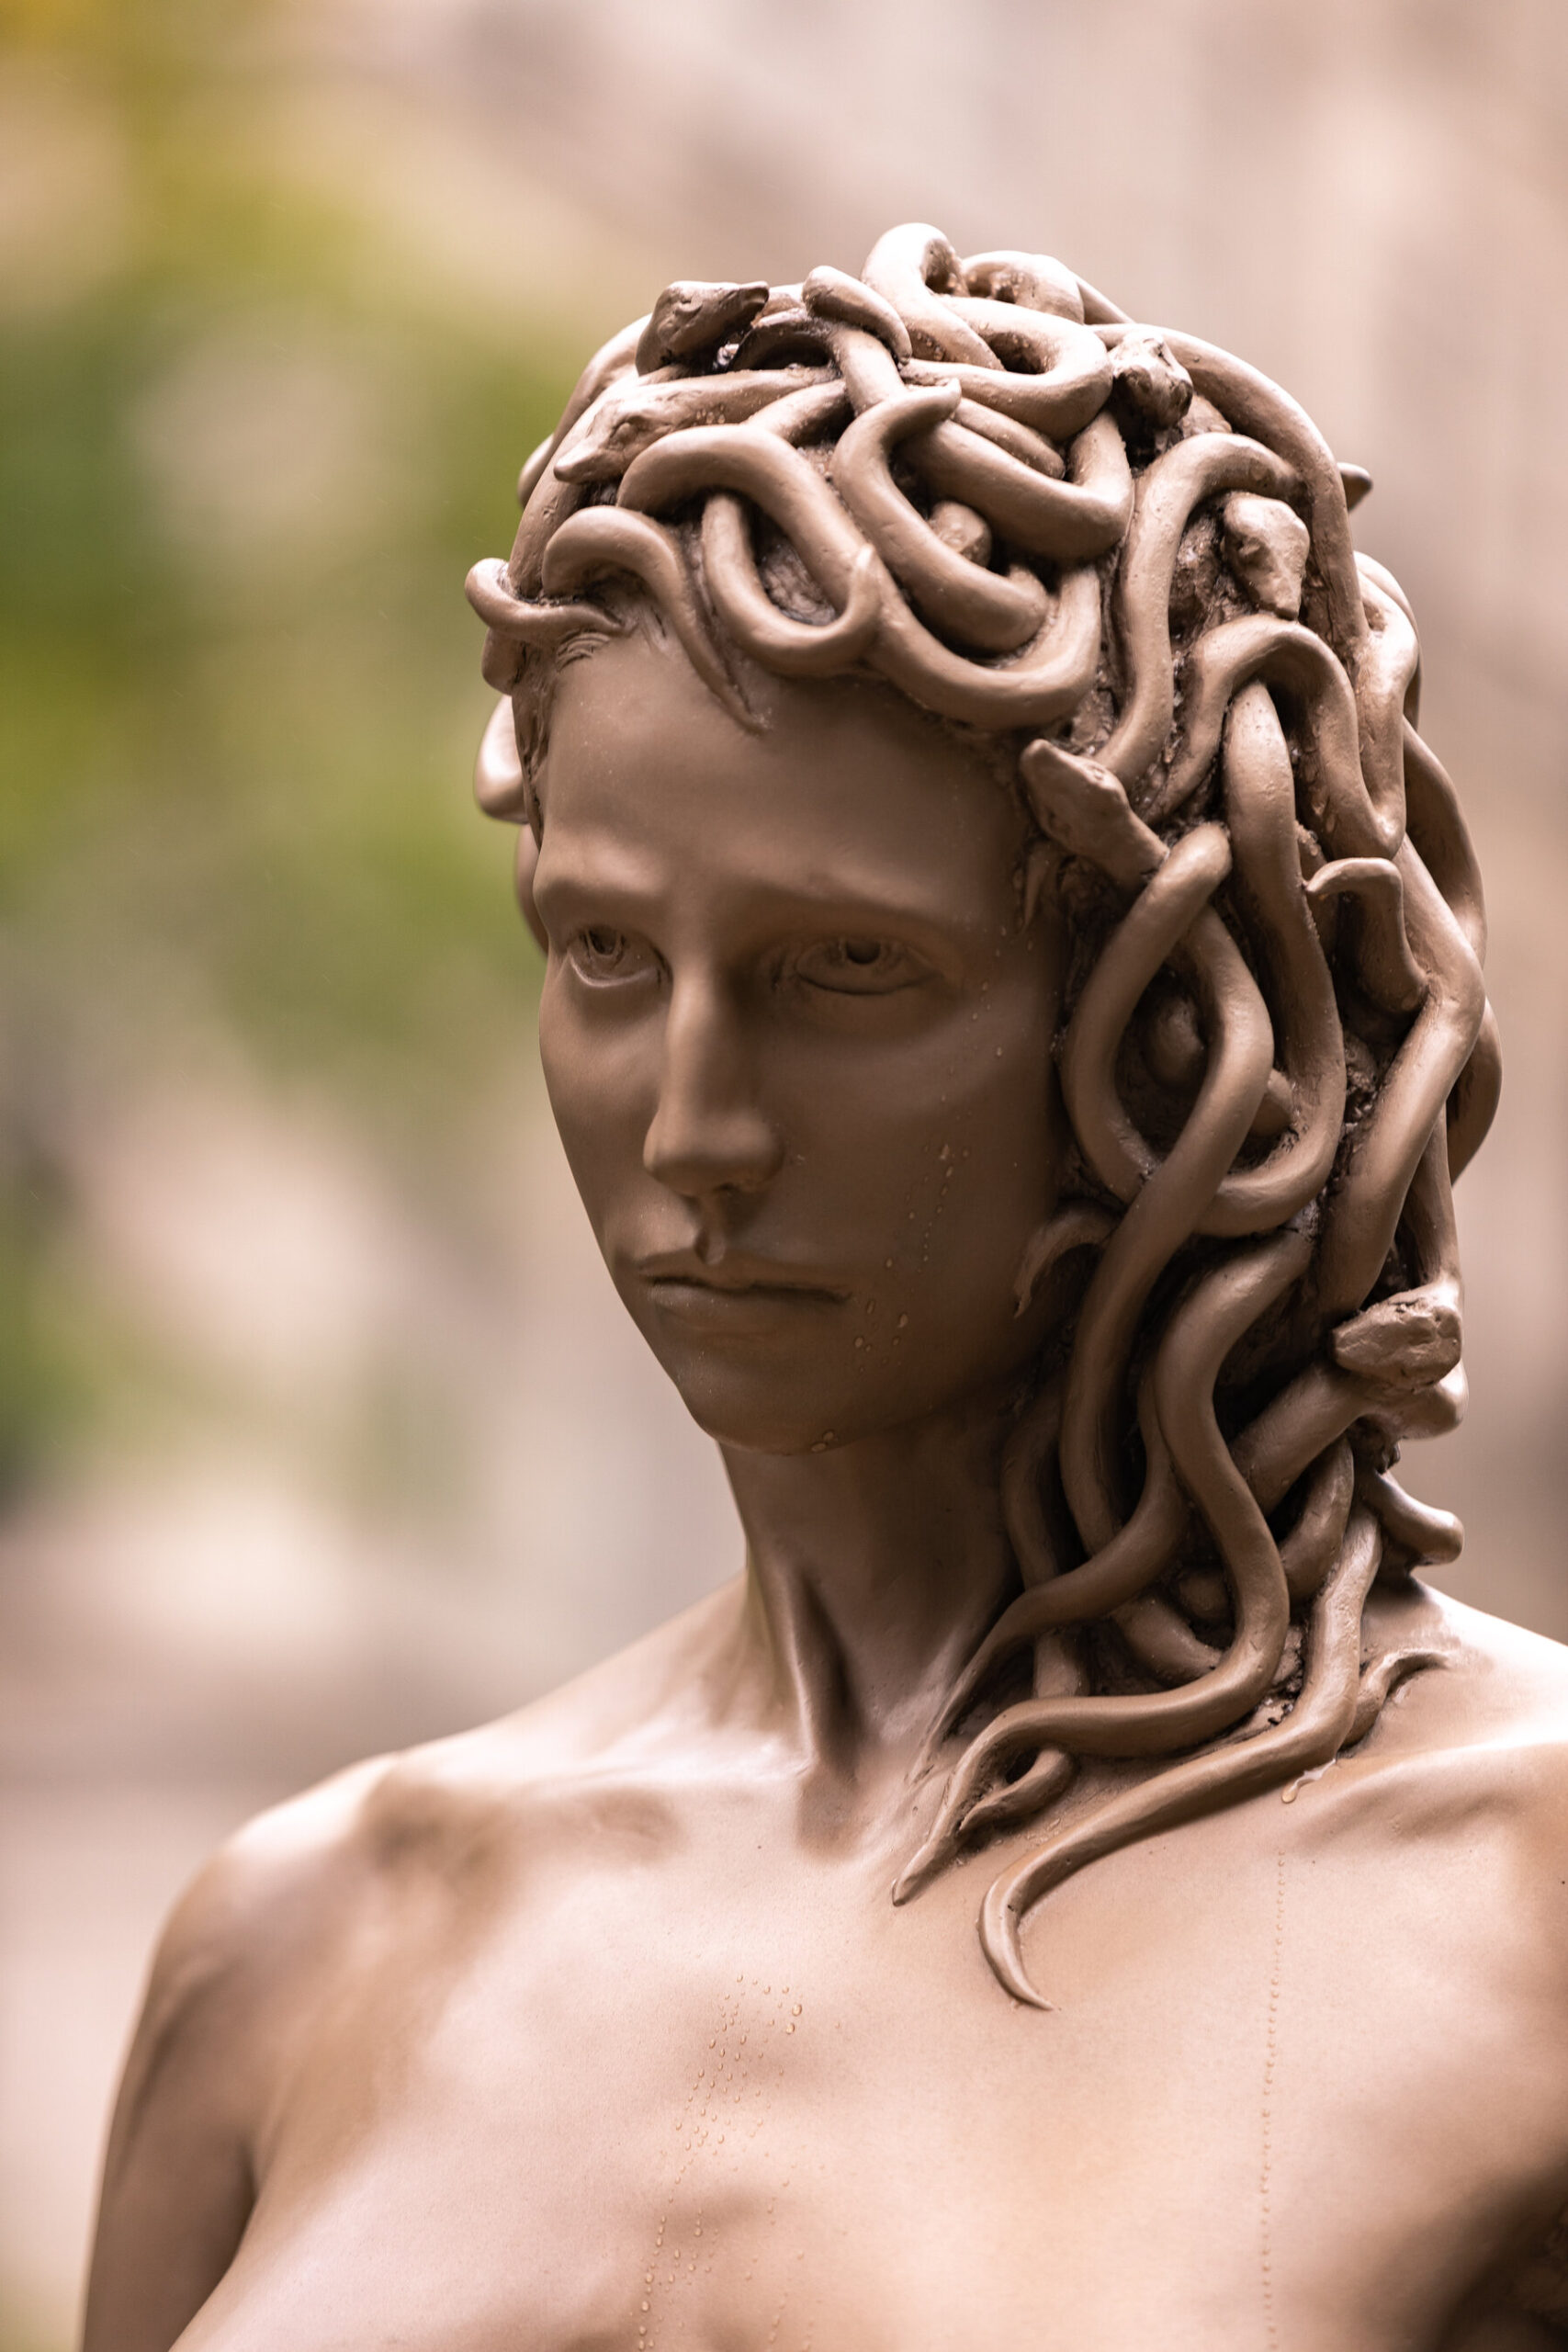 New Medusa statue stokes the feminist fire - My TJ Now